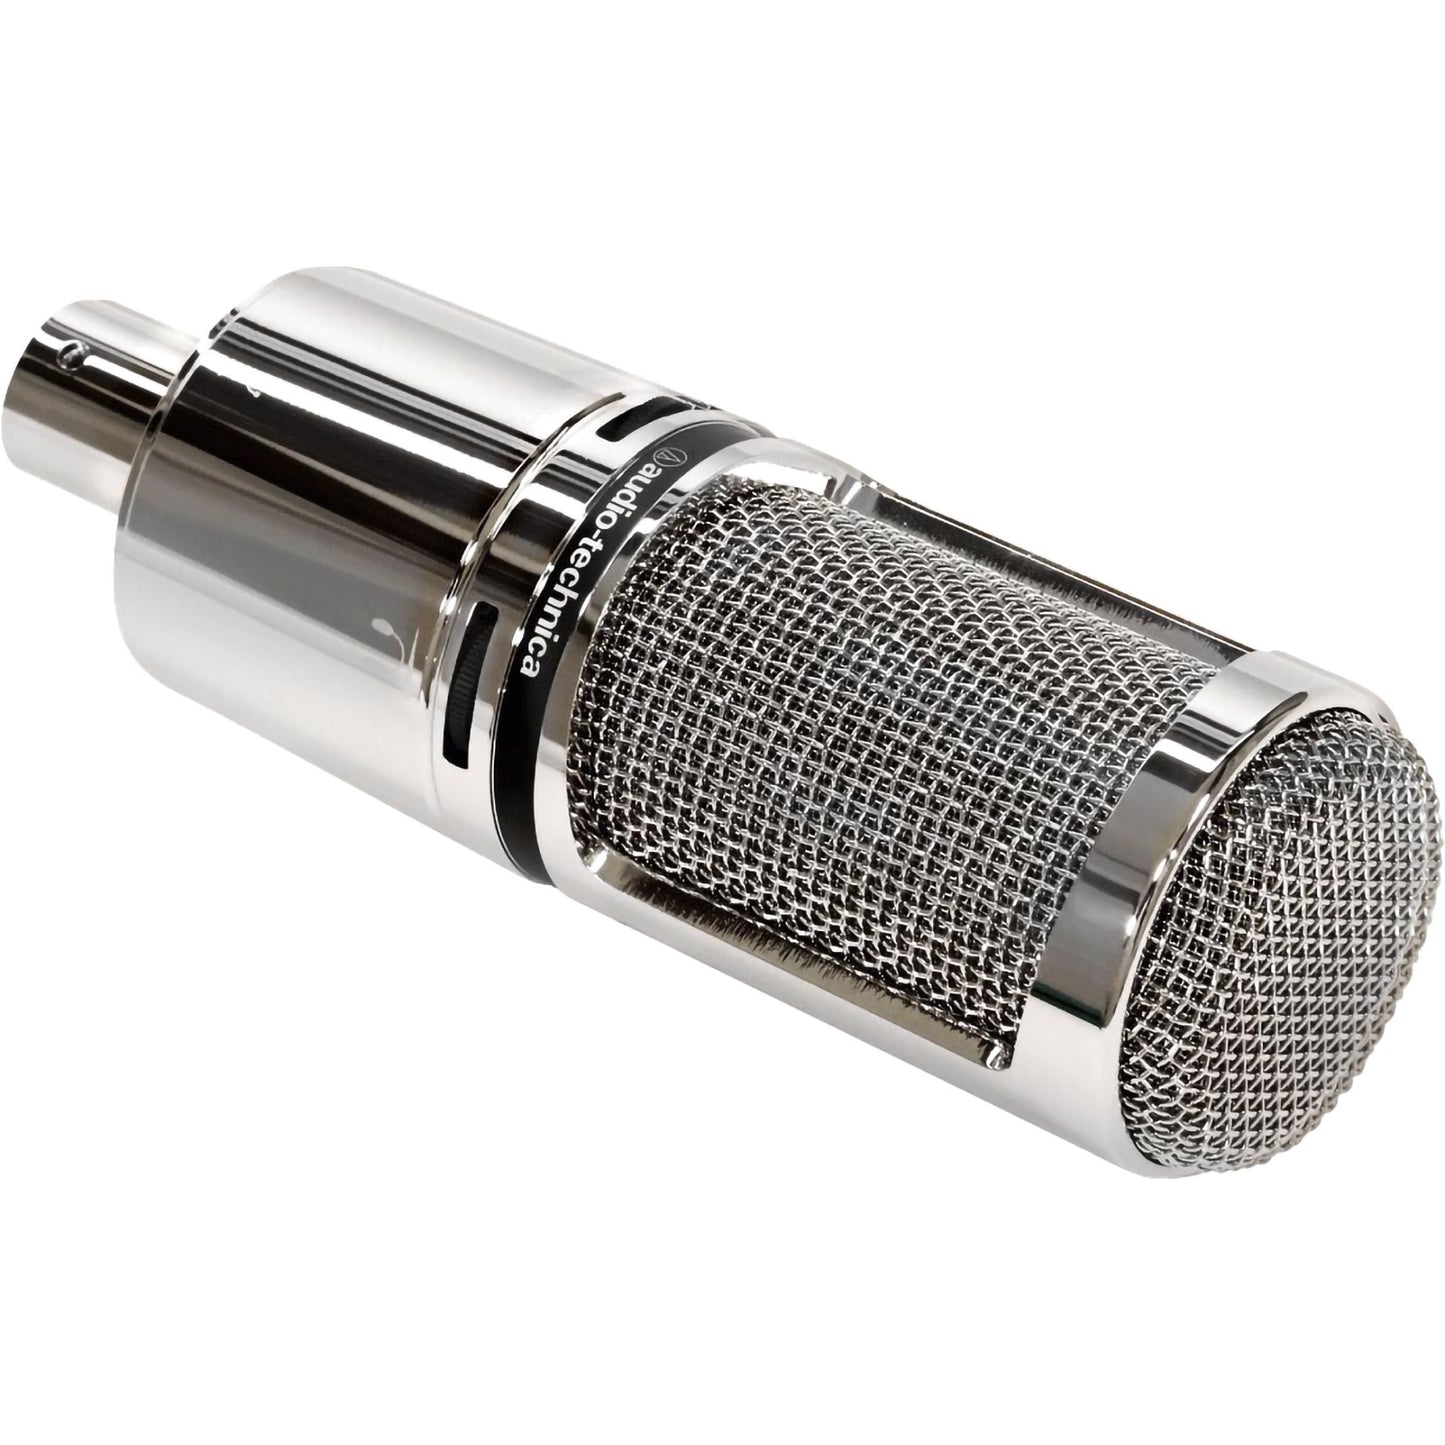 Audio Technica AT2020 USB Cardioid Condenser Microphone